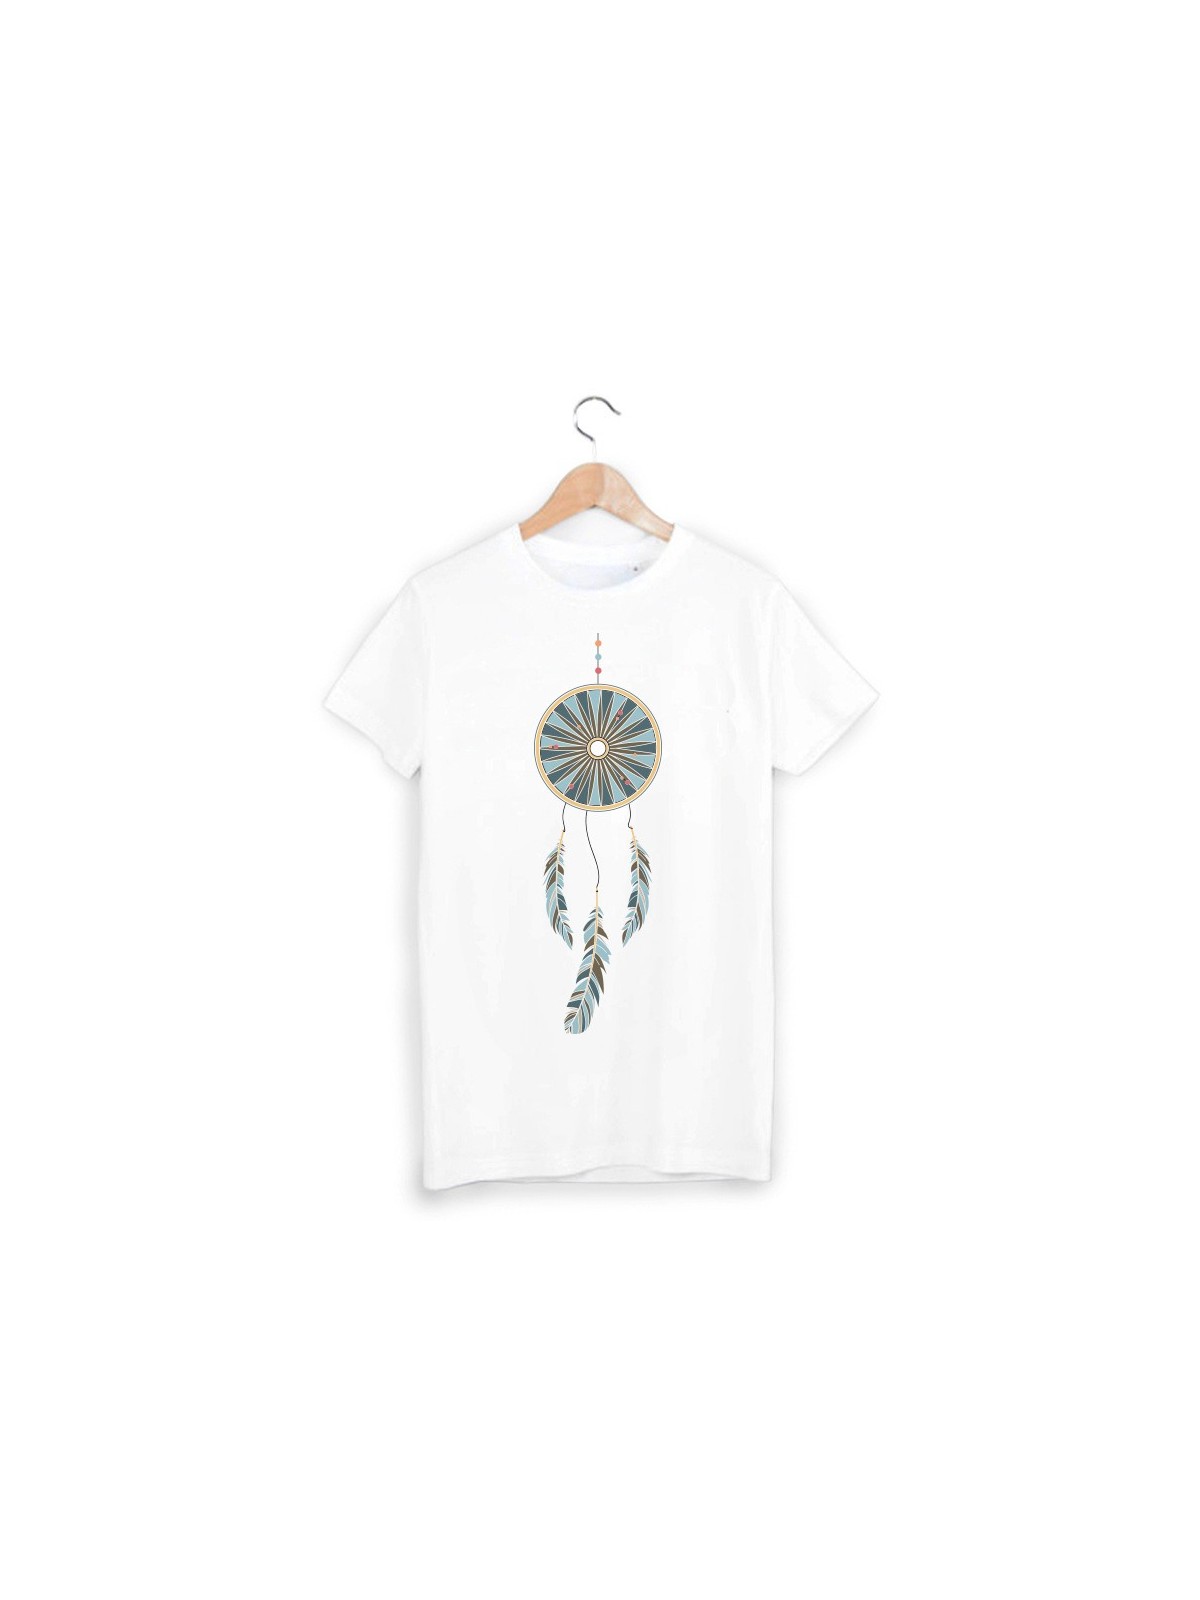 T-Shirt attrape rÃªve hippie ref 952